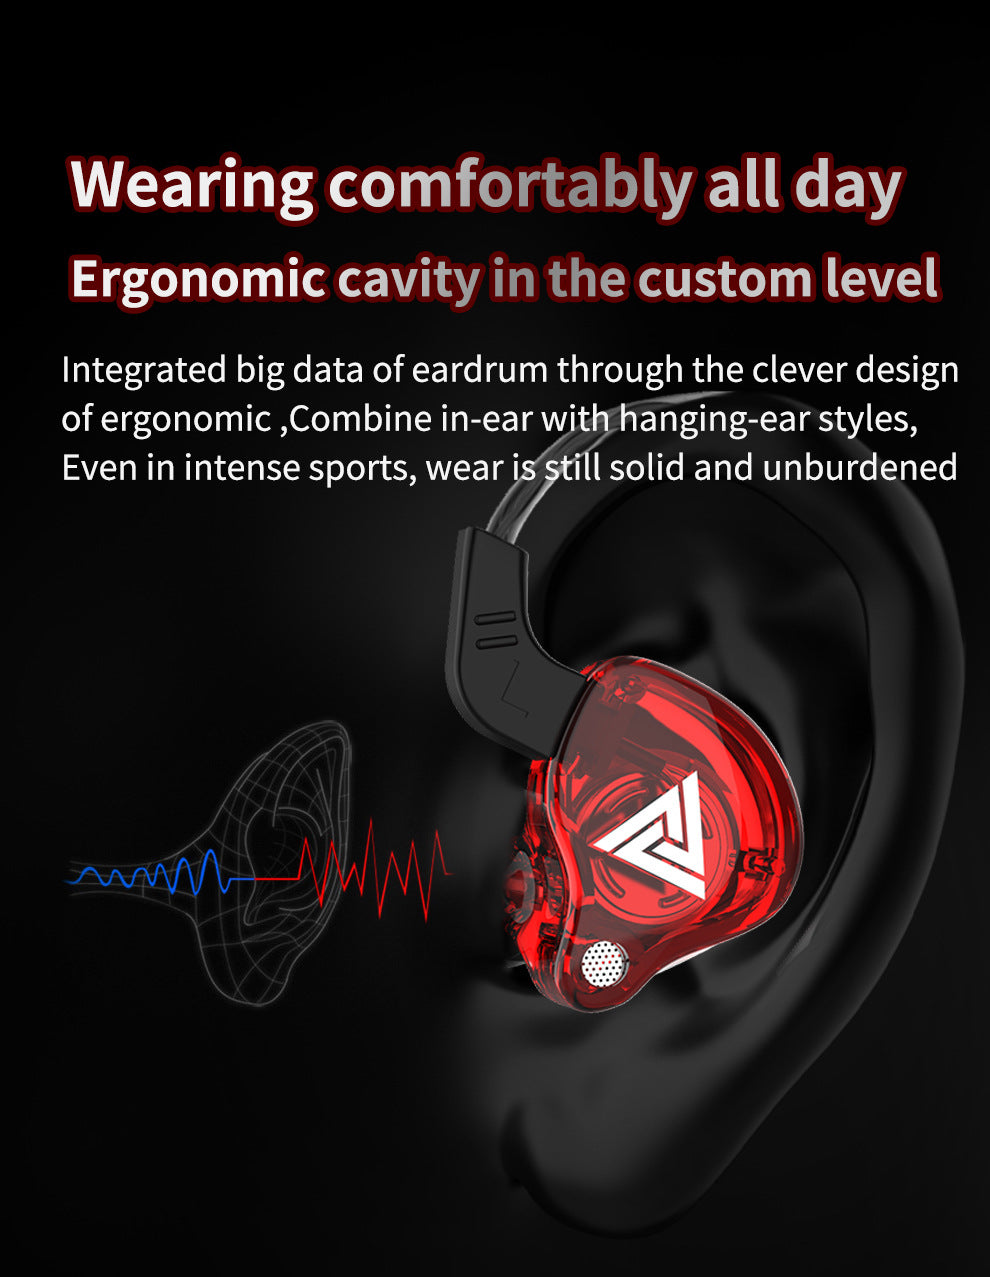 QKZ AK6 sports earphones in-ear wire control with wheat heavy bass mobile phone earphones HIFi earphones game earphones music